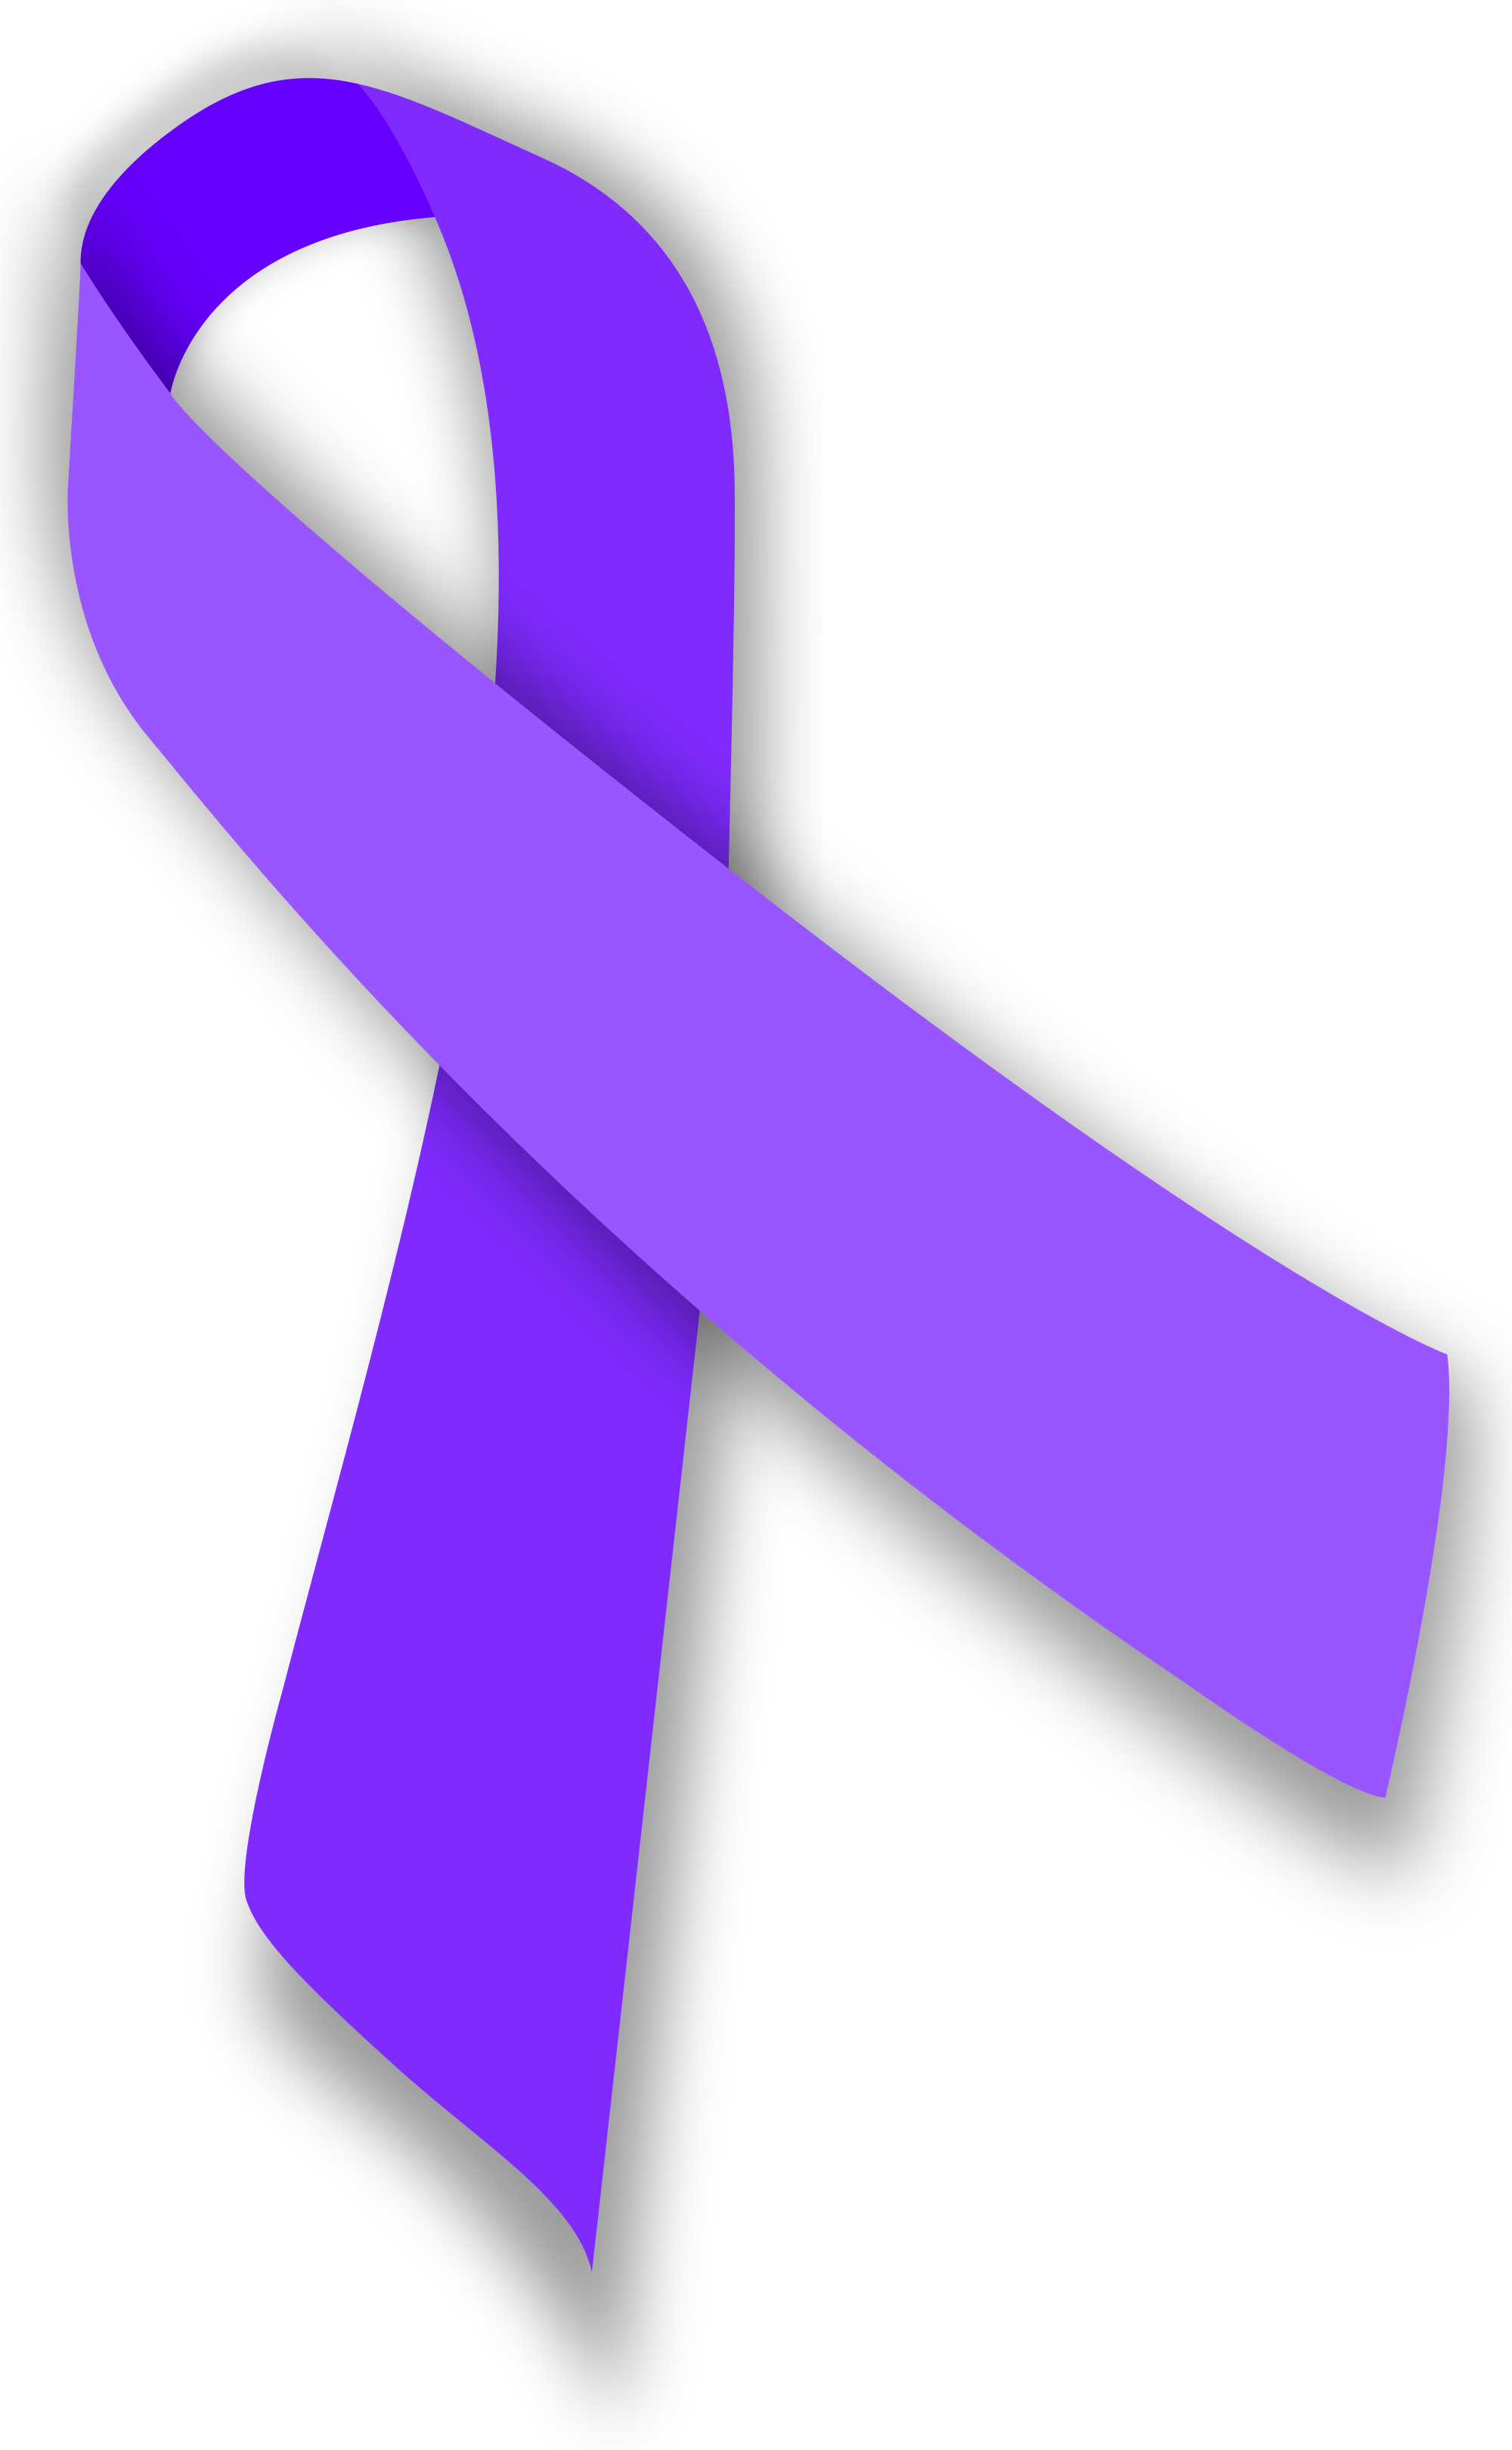 The ribbon for Teresa’s cancer